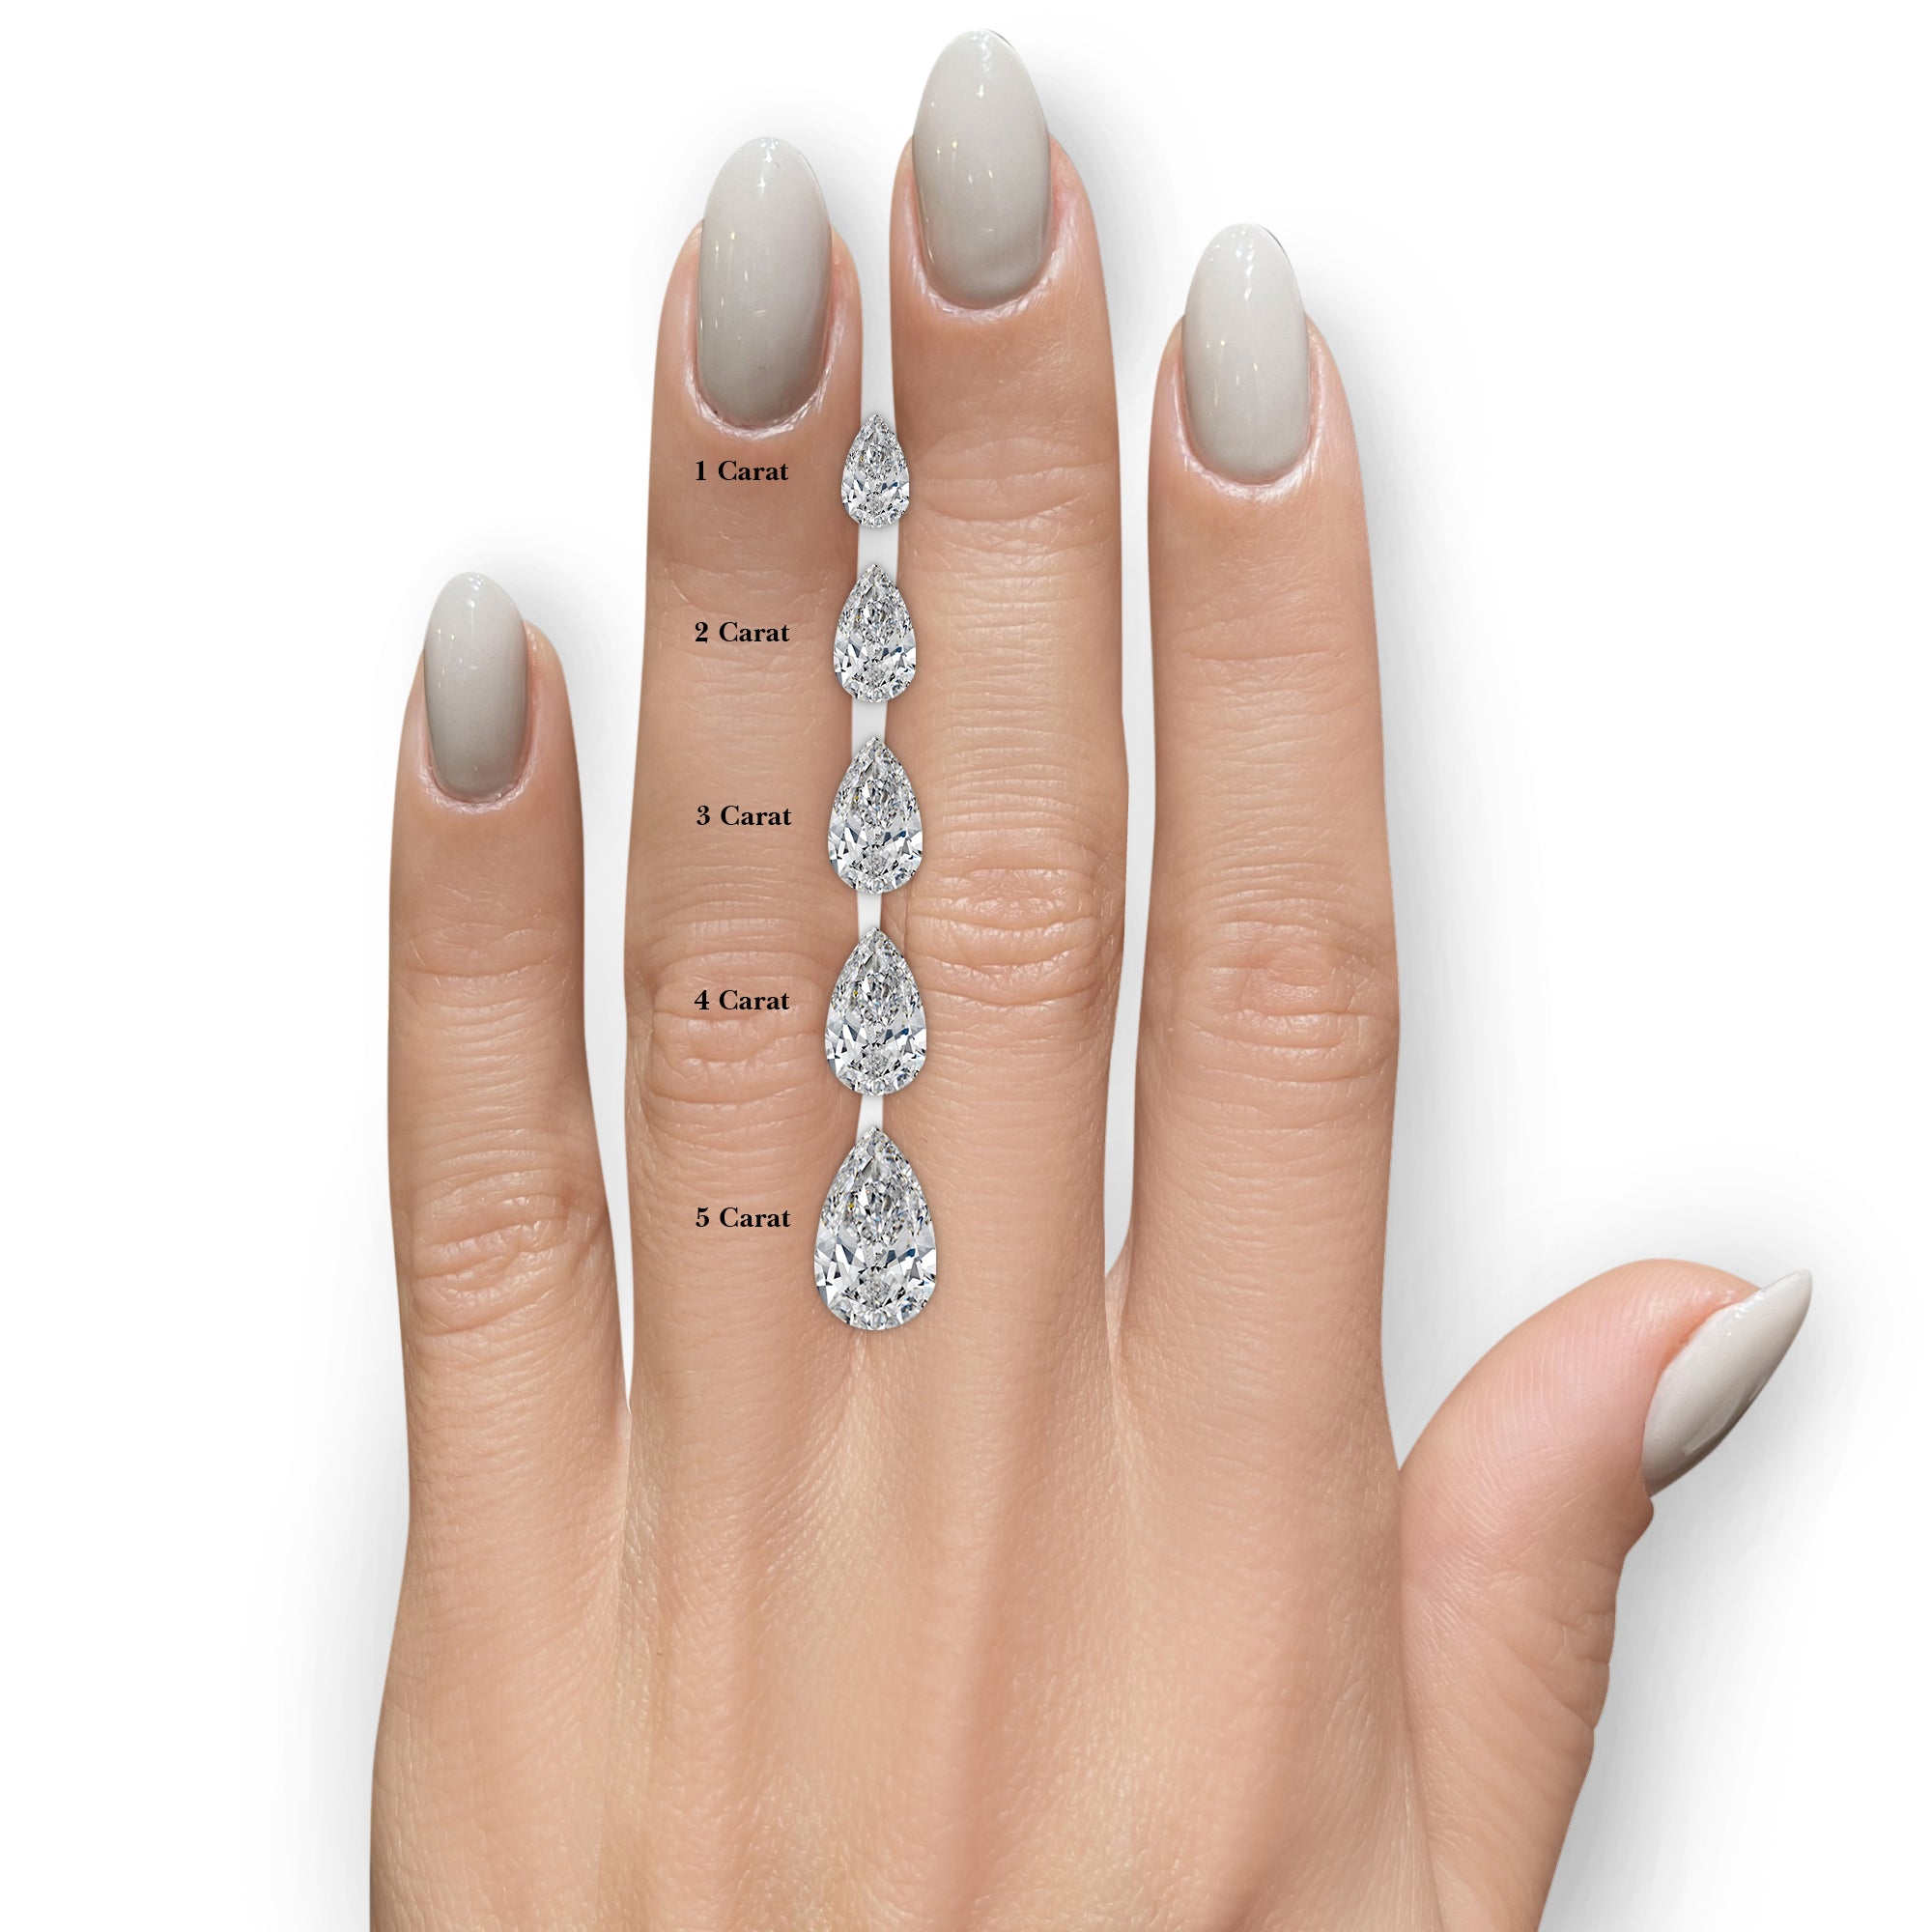 Margarita Diamond Engagement Ring -18K White Gold